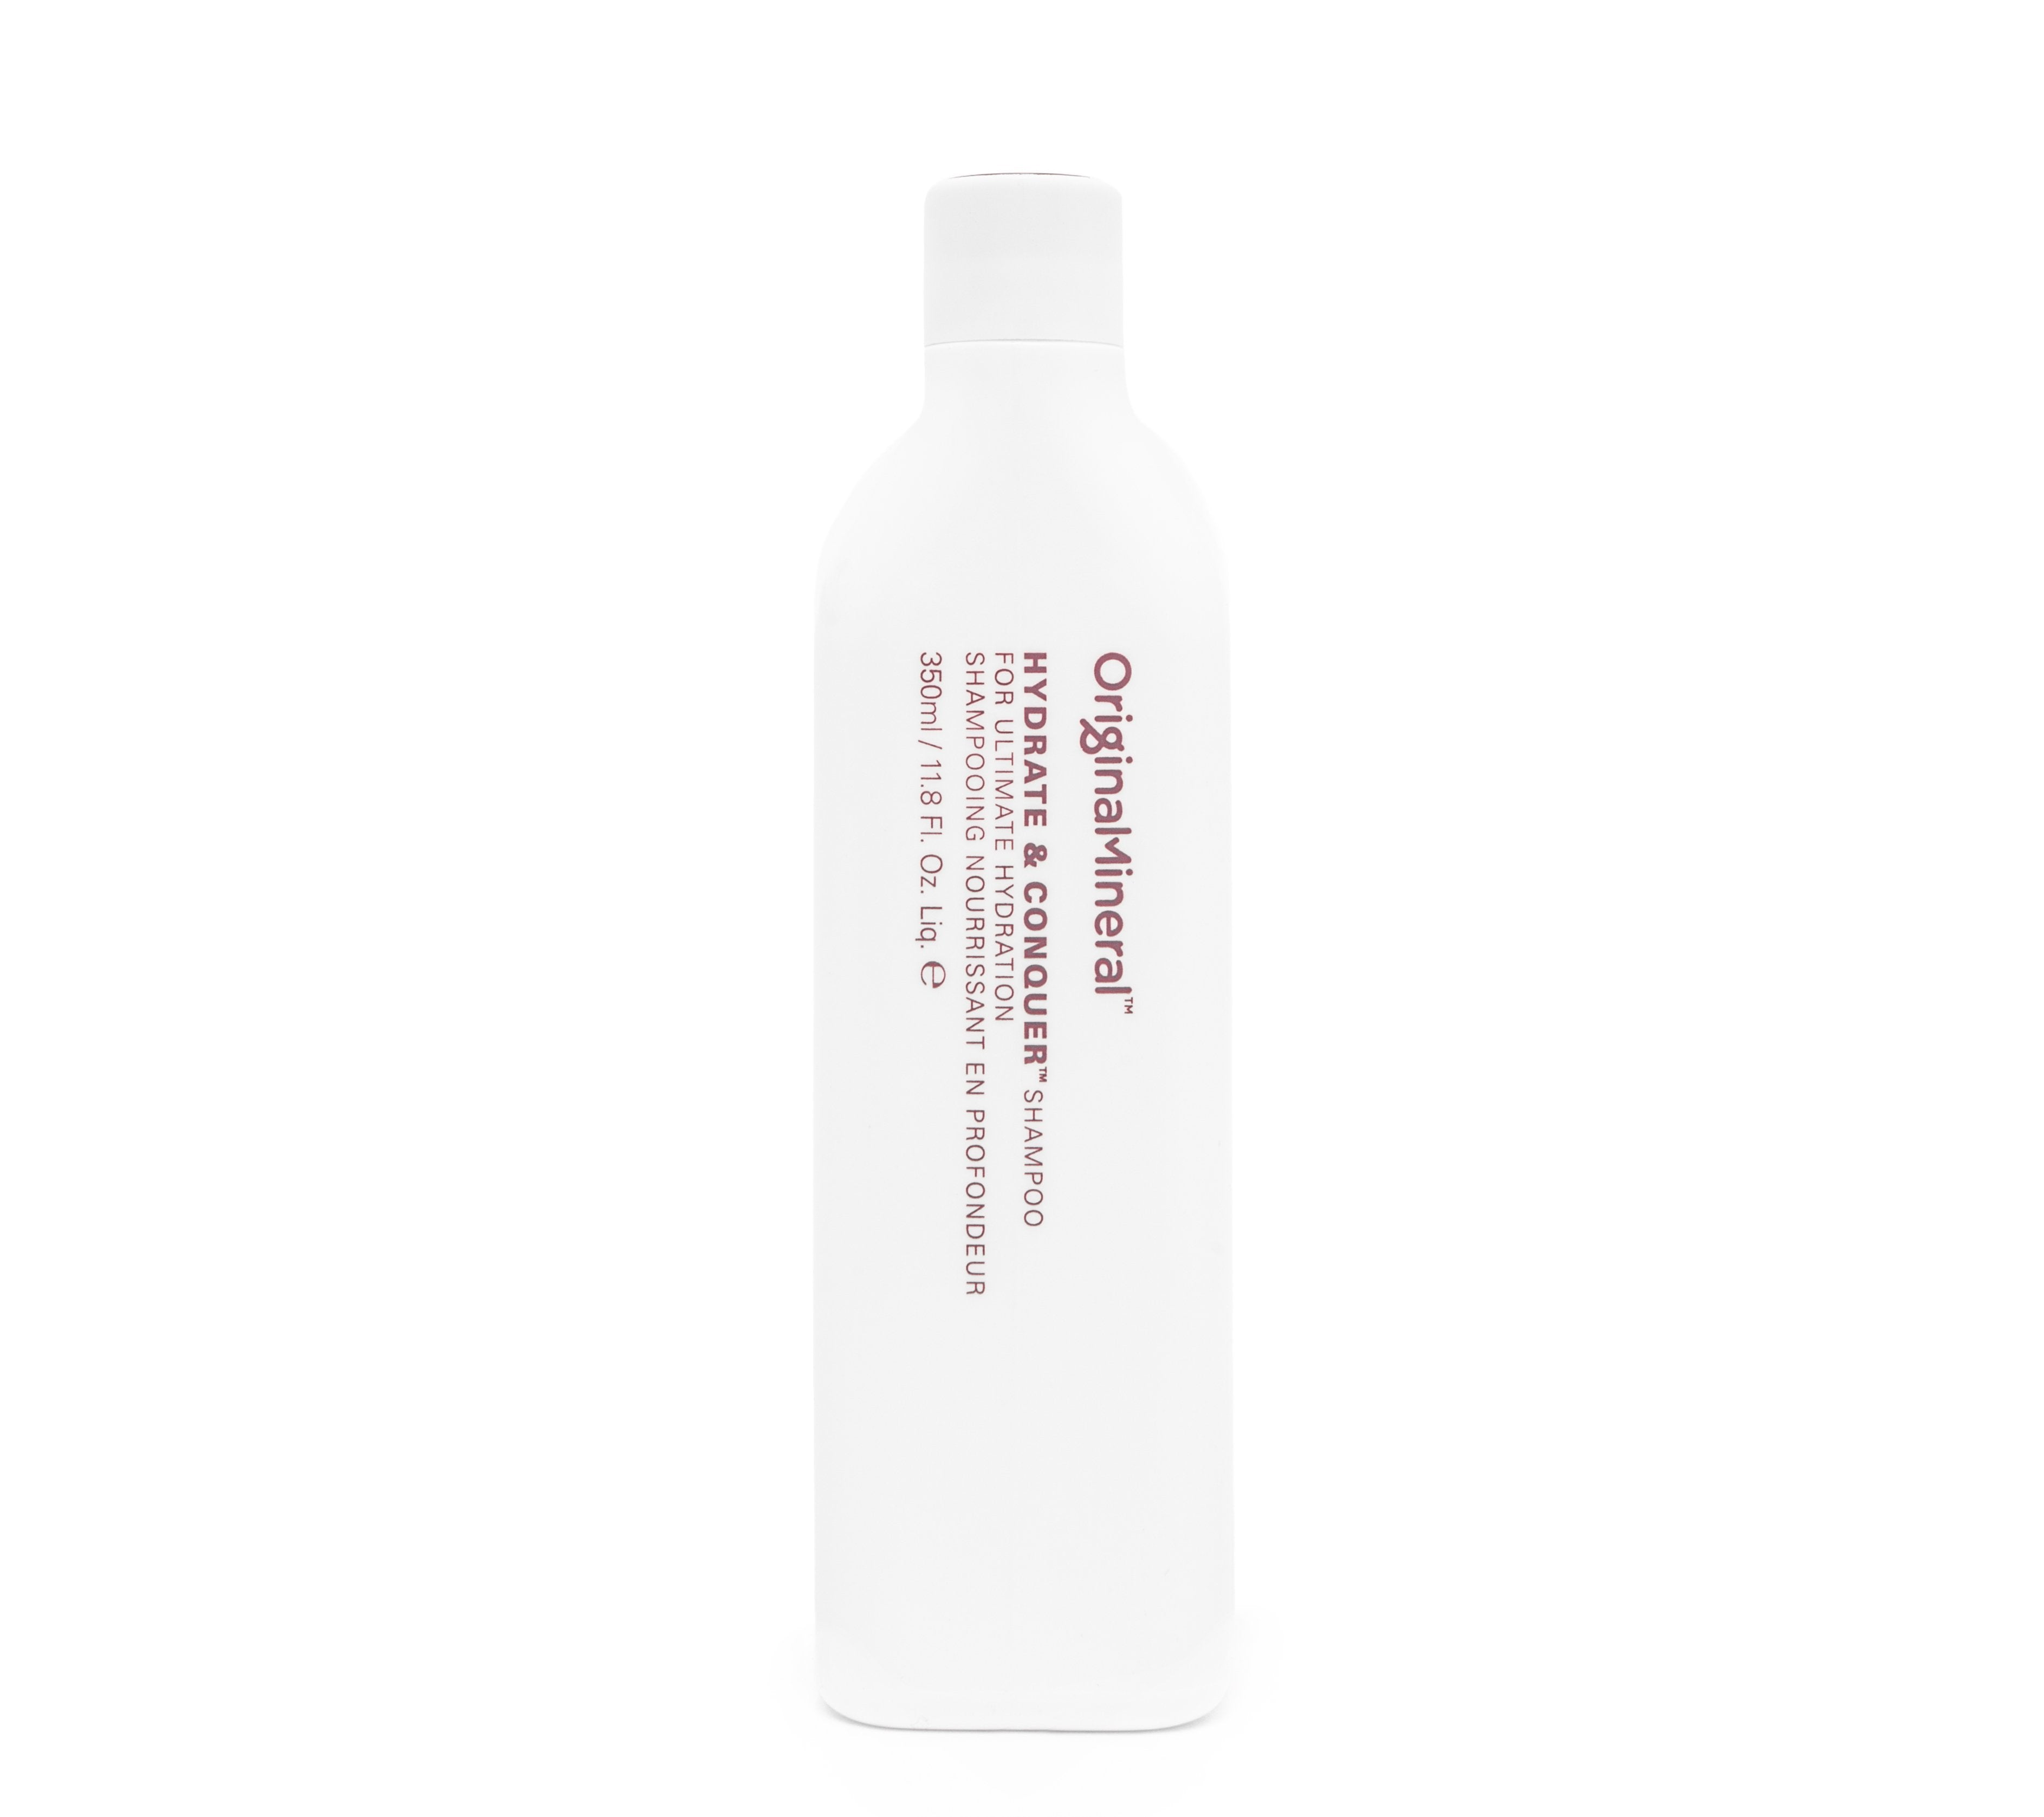 O&M Hydrate & Conquer Shampoo 350ml